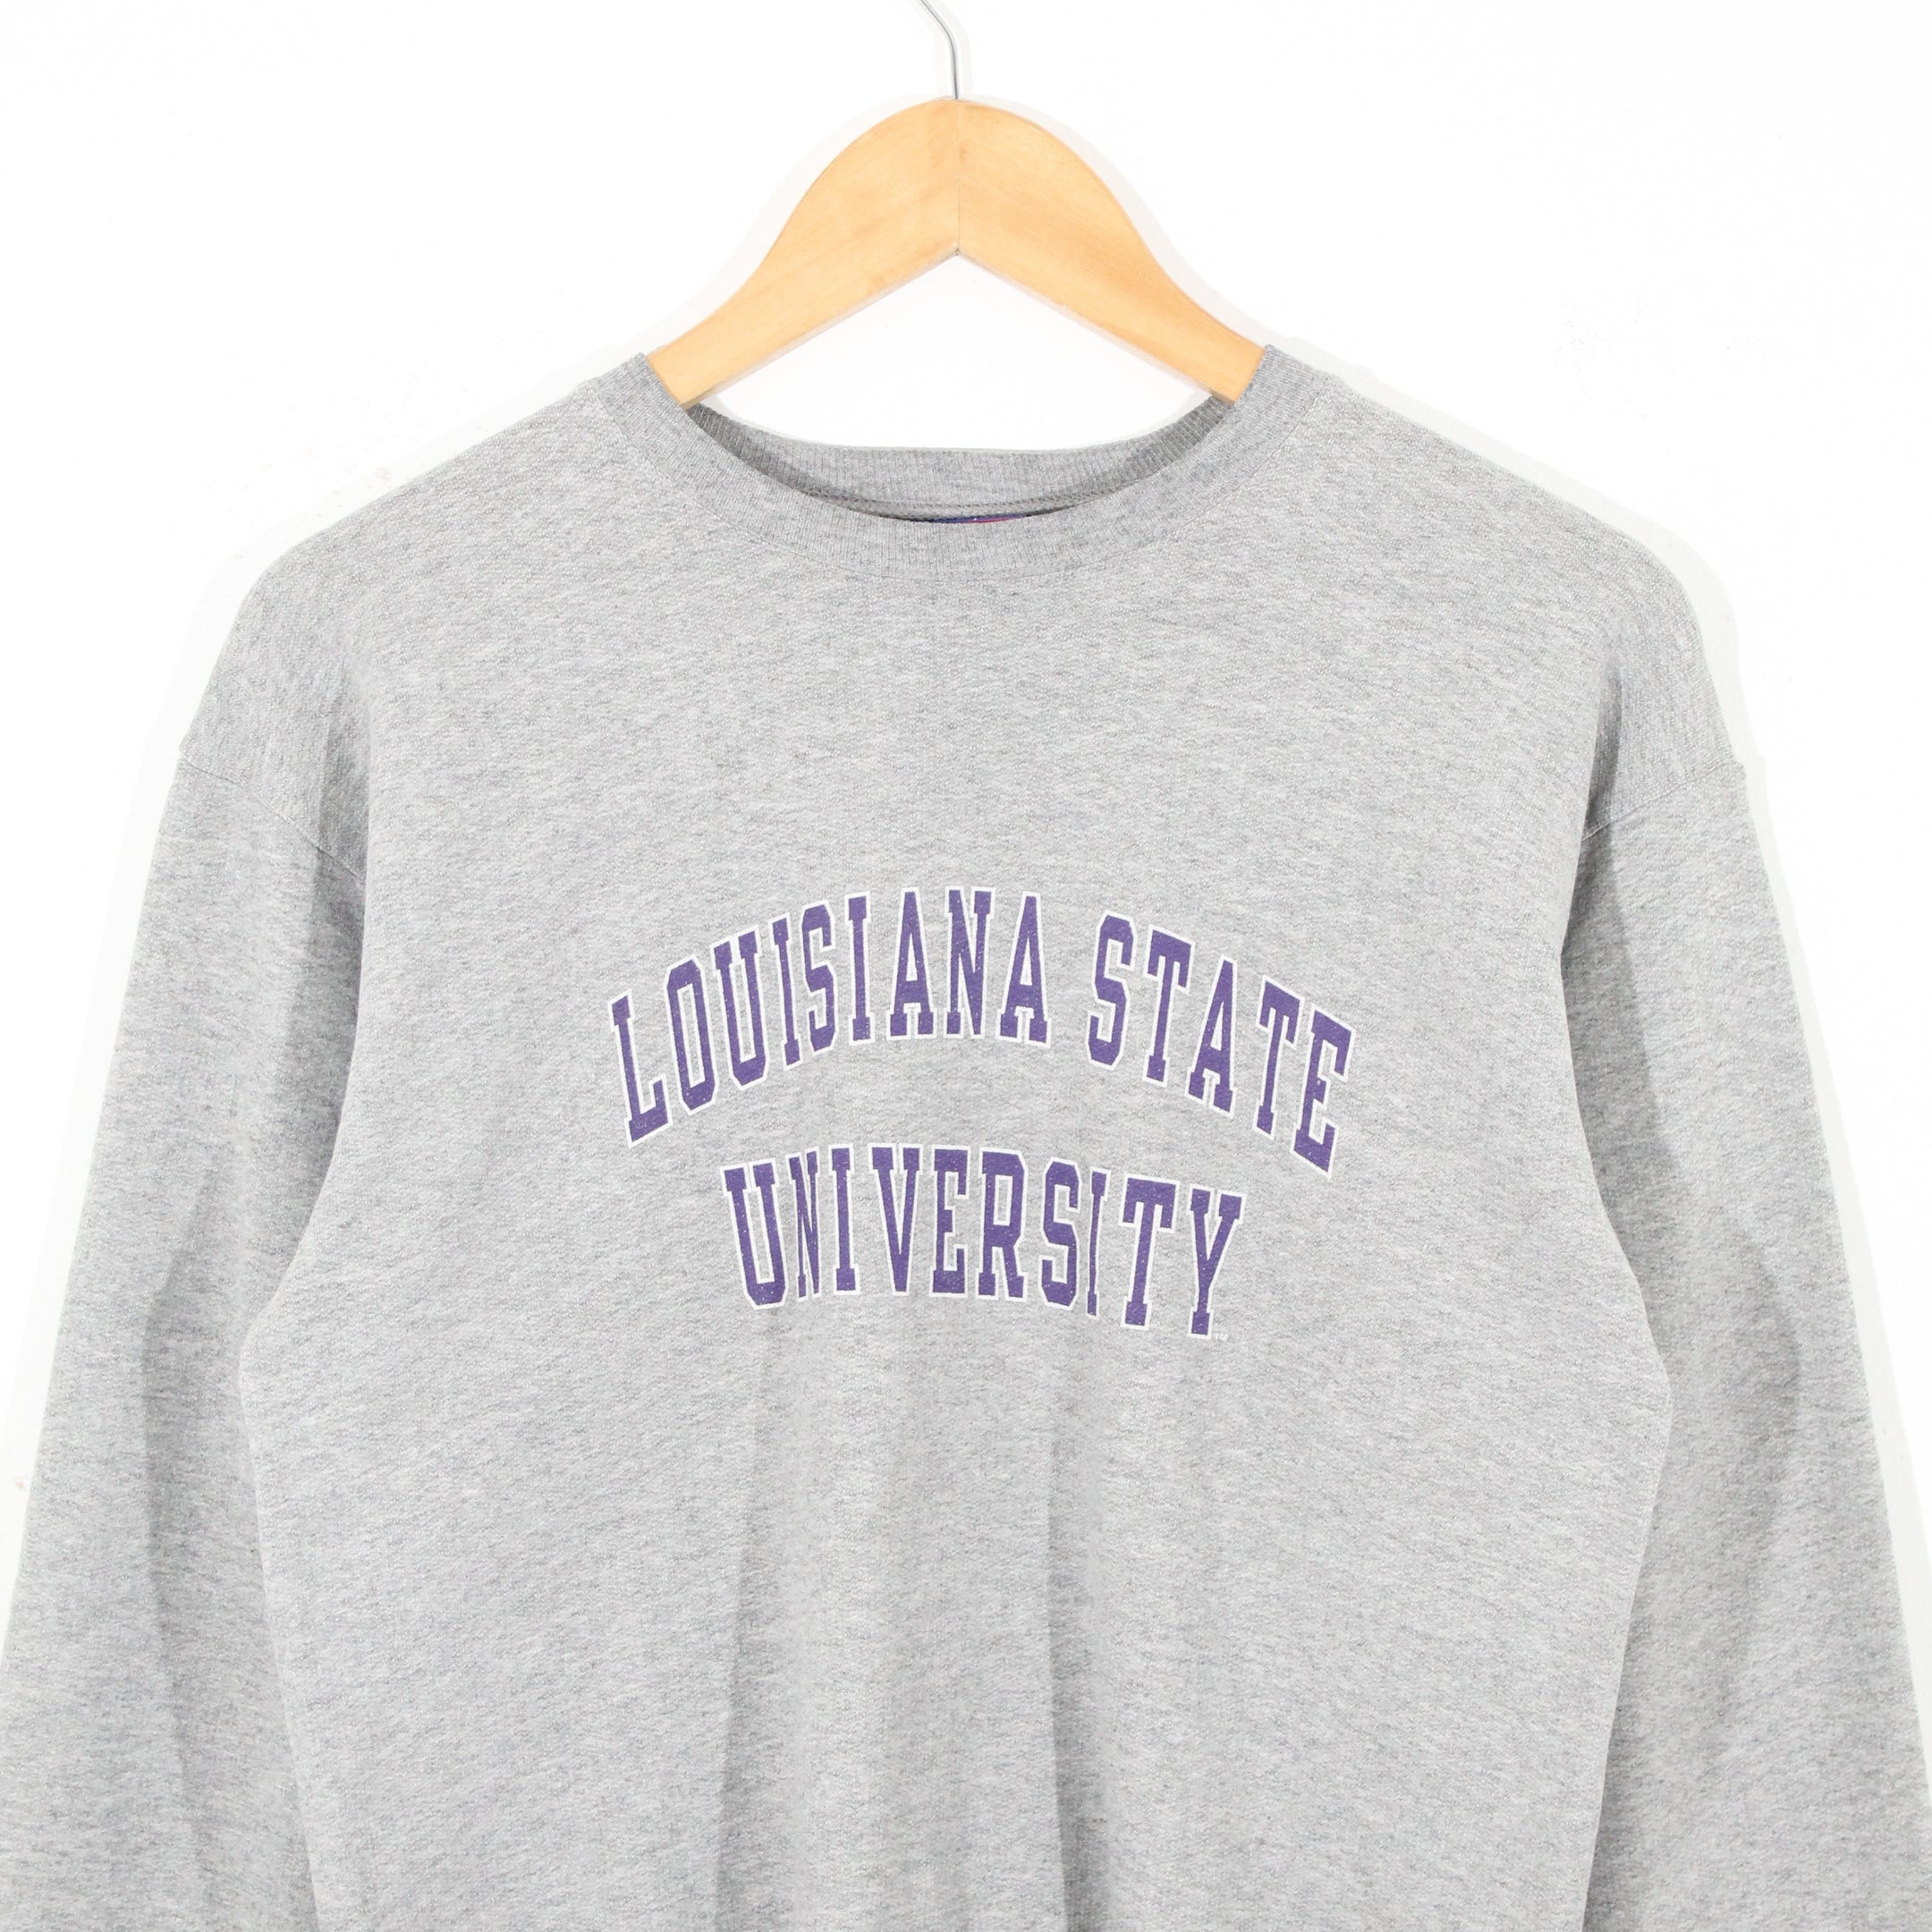 Champion Louisiana State University Sweatshirt (S)